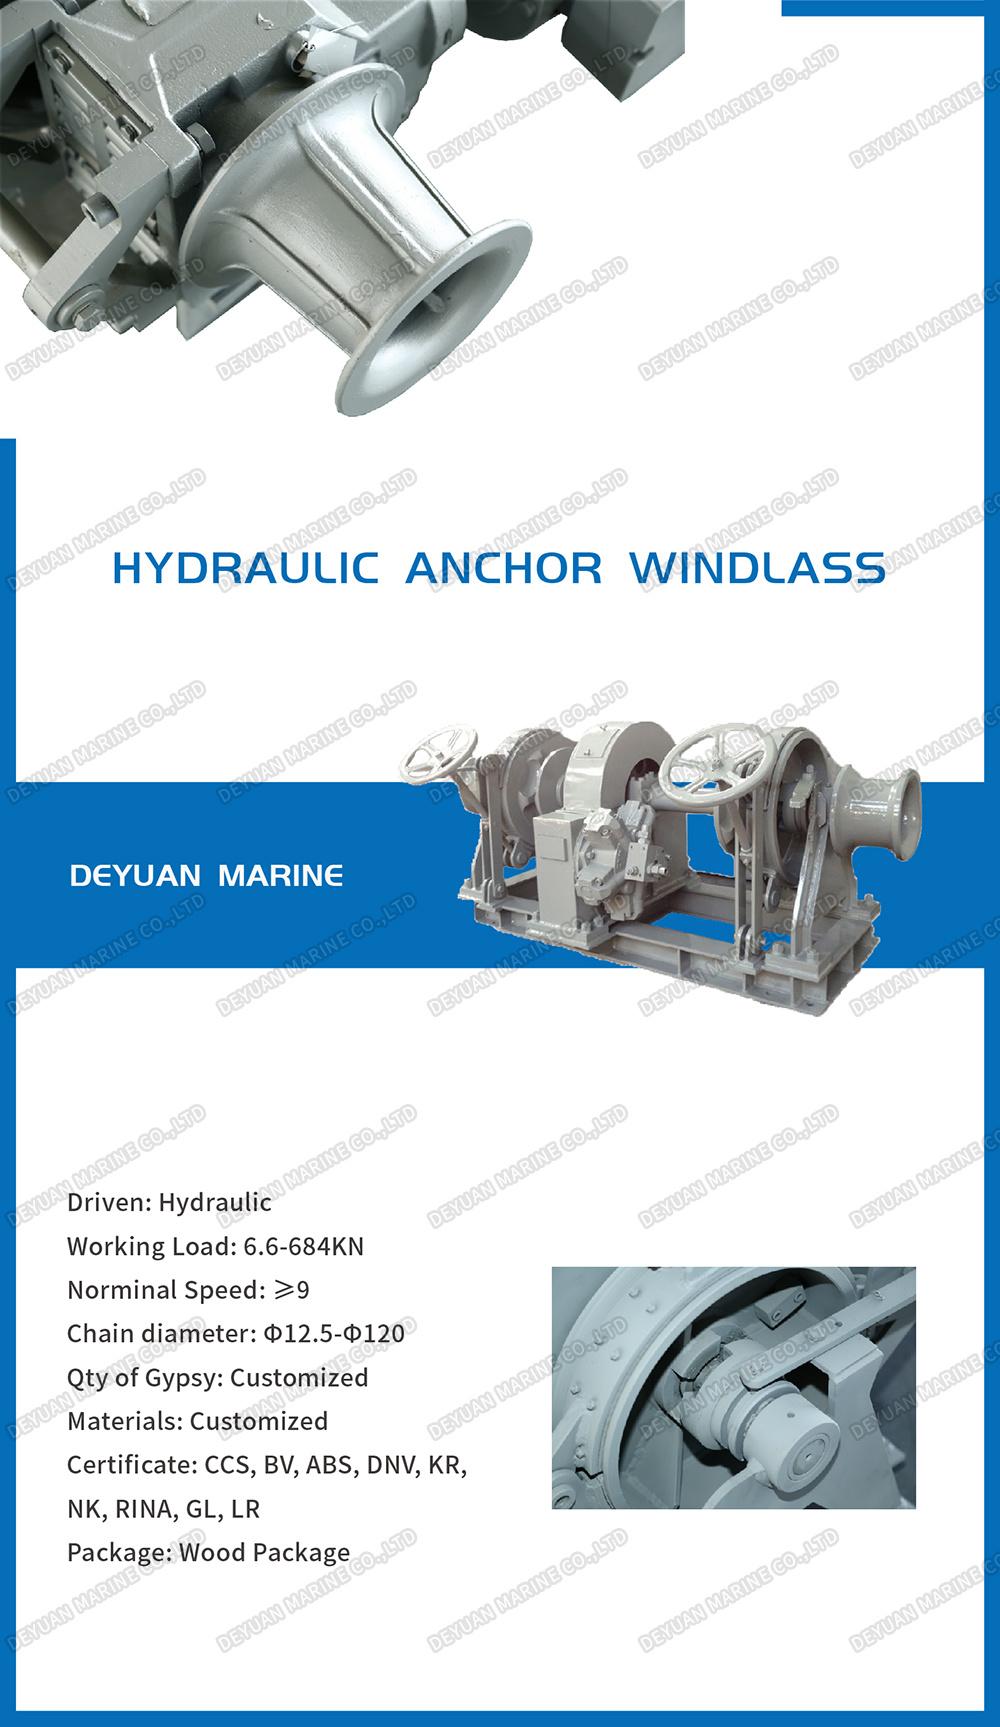 Marine Hydraulic Driven Single Gypsy Combined Windlass